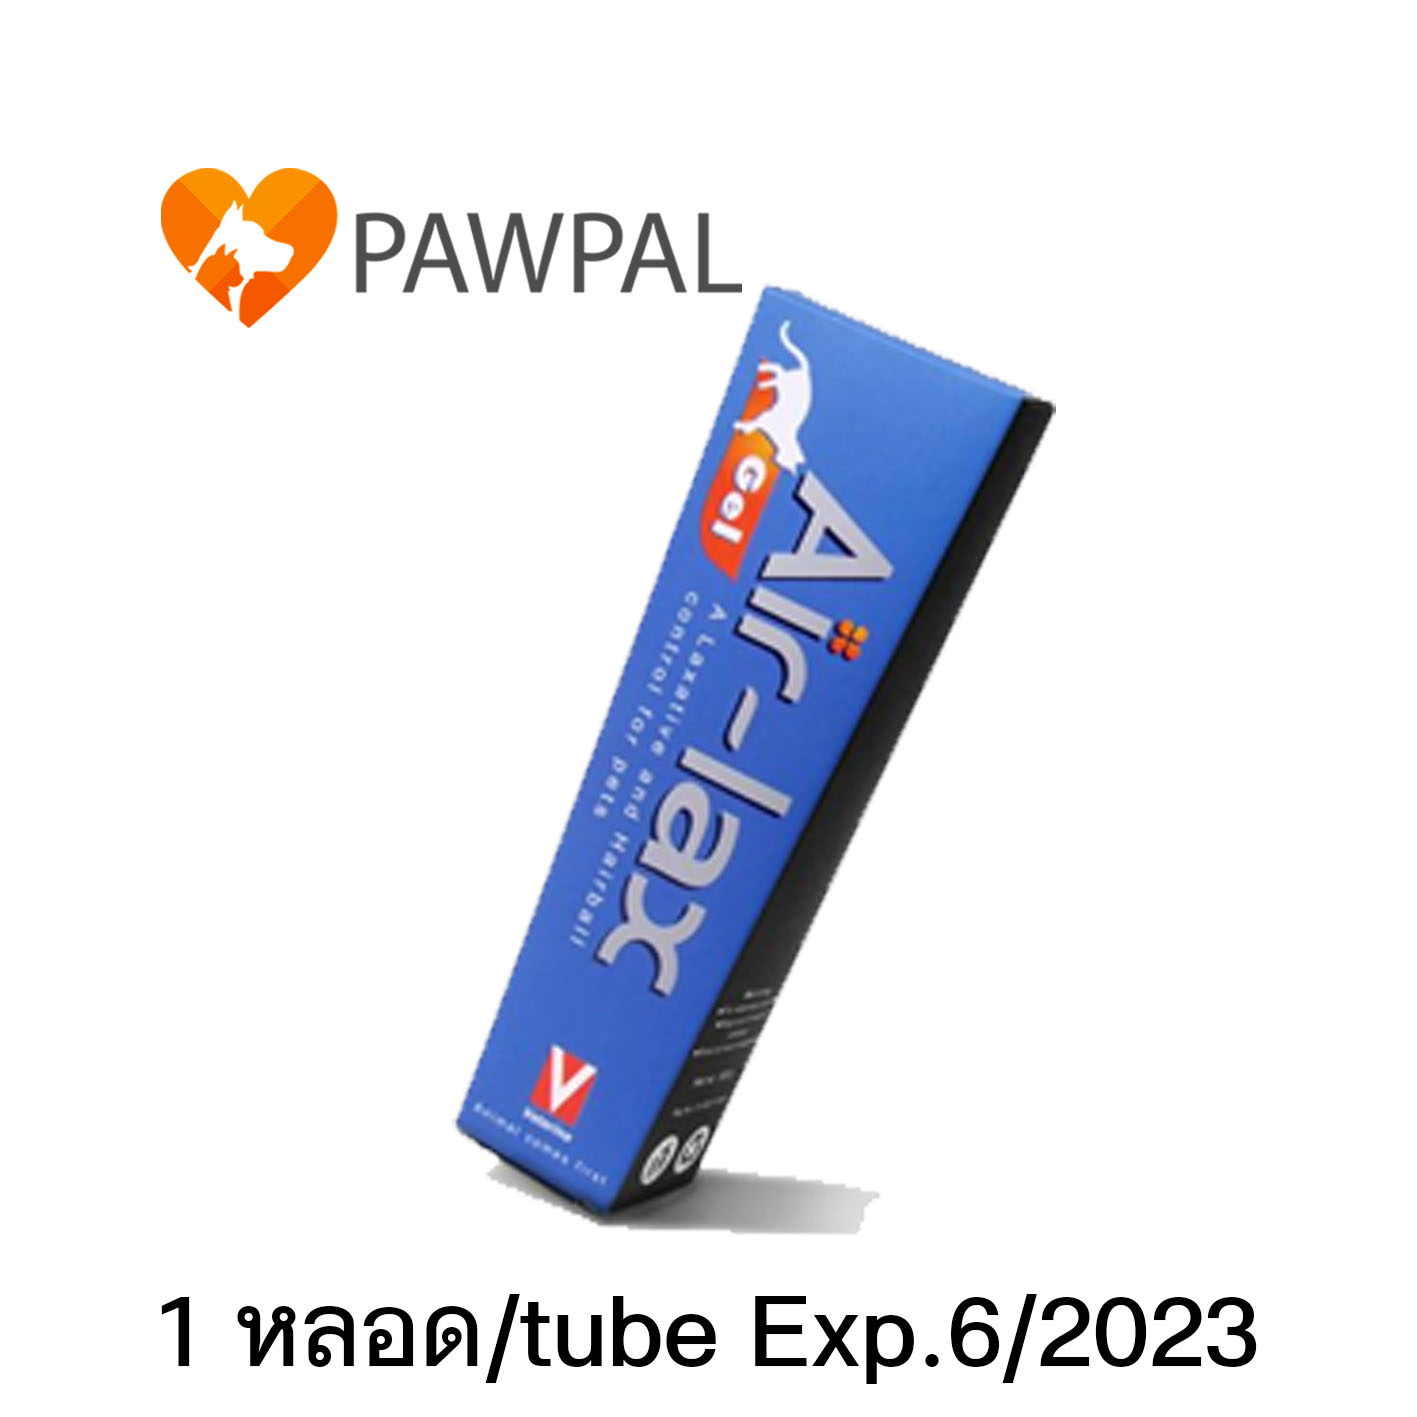 Air-lax gel Veterina 100 g Exp.6/2023 เจลระบายก้อนขน สลายก้อนขน สำหรับสุนัข แมว hair ball gel dog cat